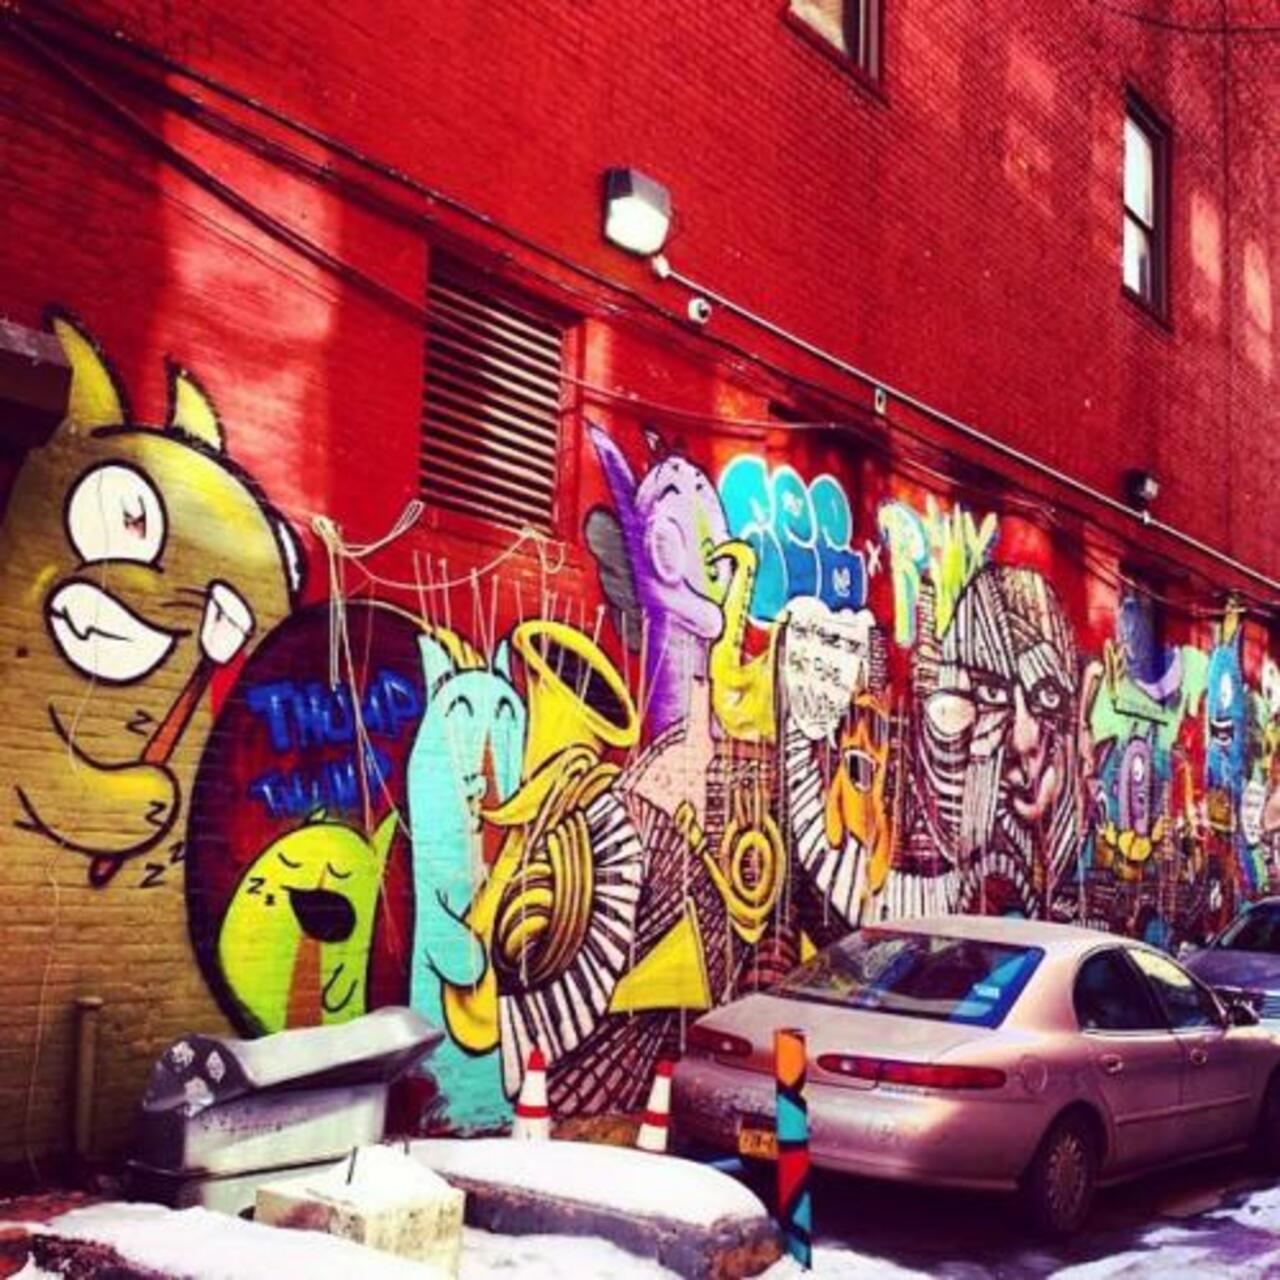 ##Sprayart ##Stencil ##Streetart ##Graffiti ... - #Mural - #ZangArt #Showcase - http://bit.ly/18vSCog http://t.co/86QxTe6jLj